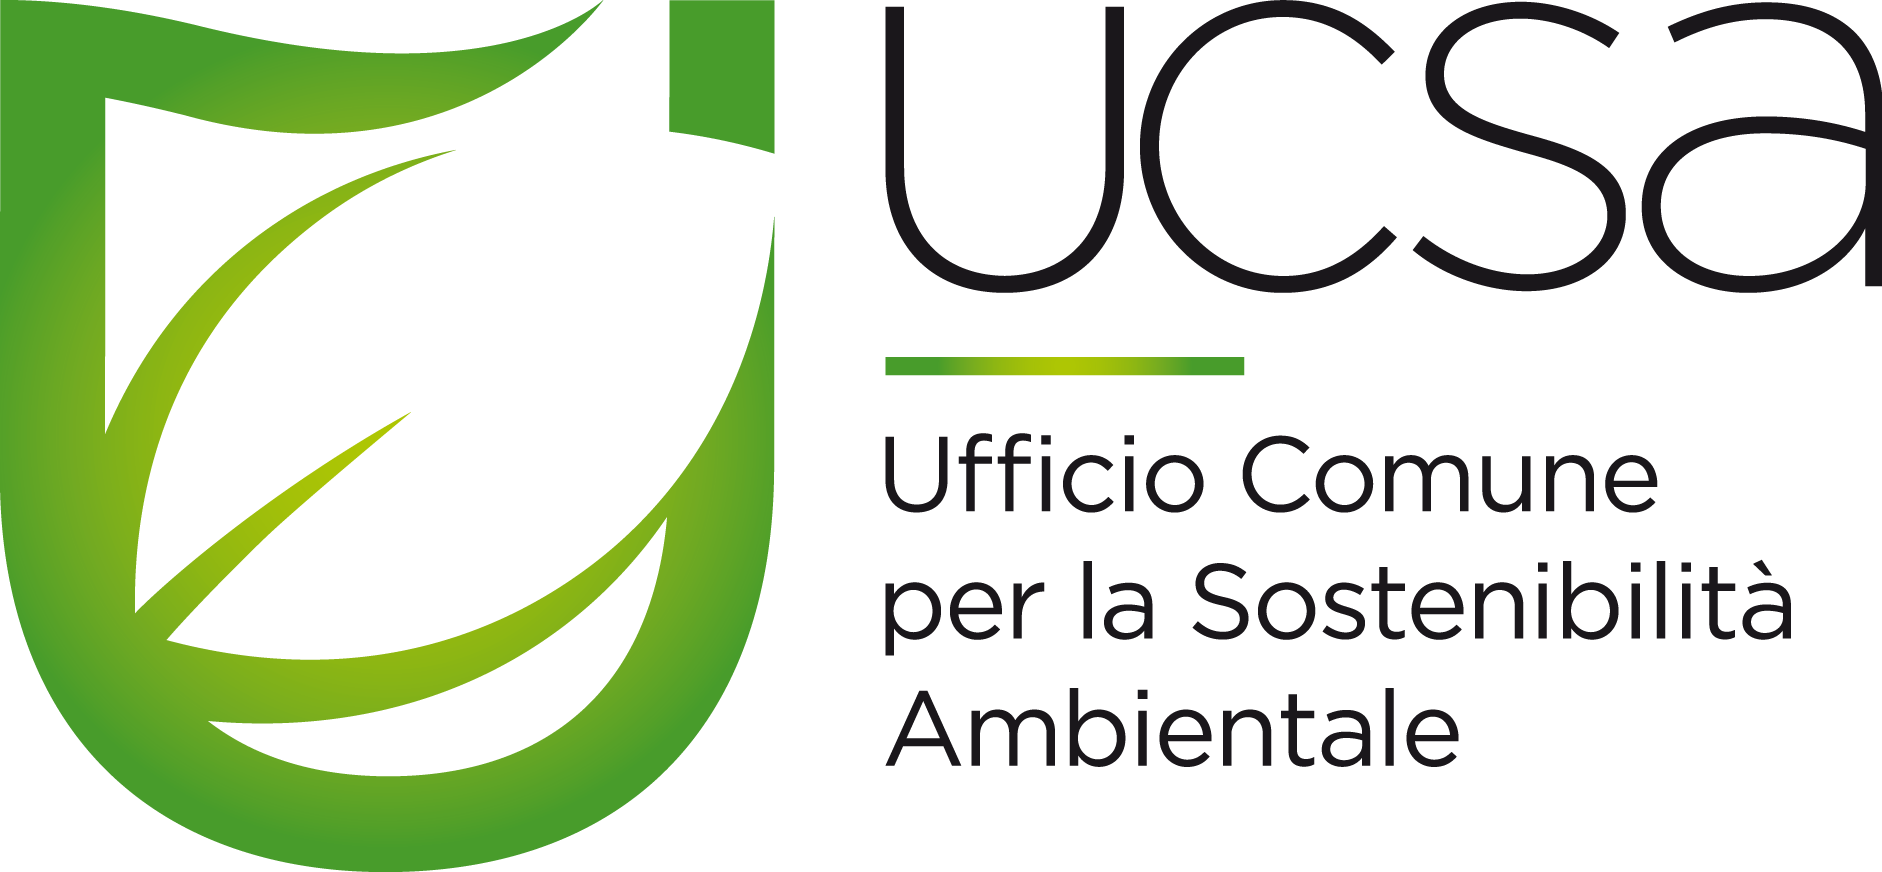 UCSA-logo-orizzontale-sfumato.png